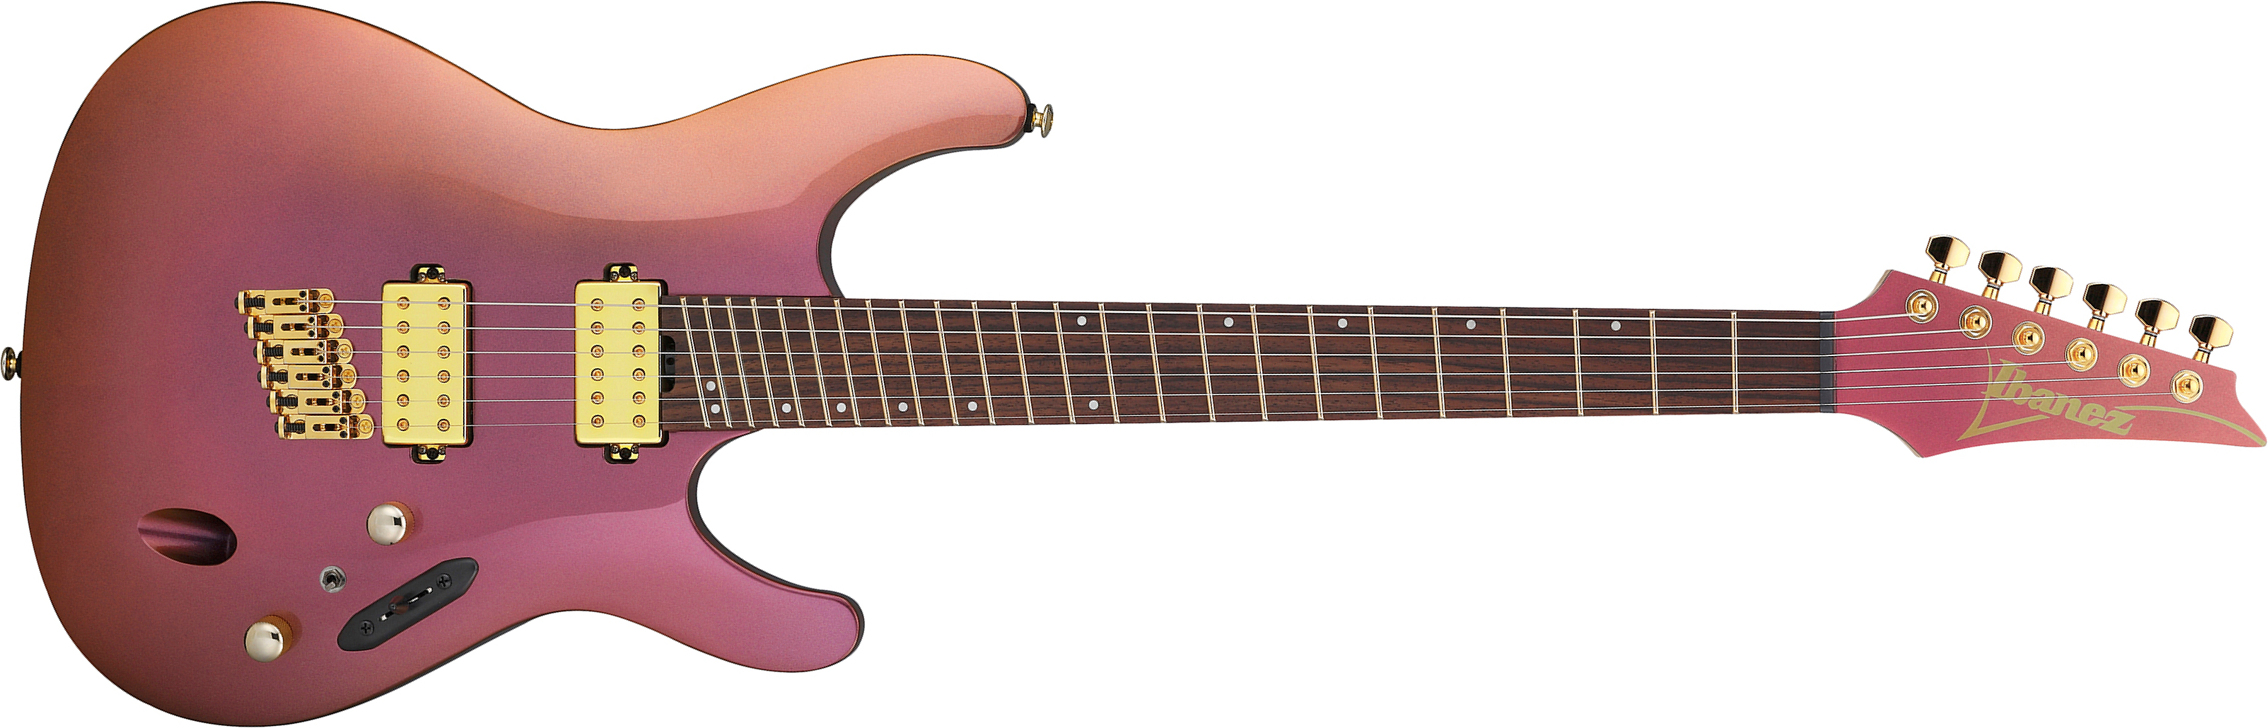 Ibanez Sml721 Rgc Axe Design Lab Multiscale 2h Ht Rw - Rose Gold Chameleon - Multi-scale gitaar - Main picture